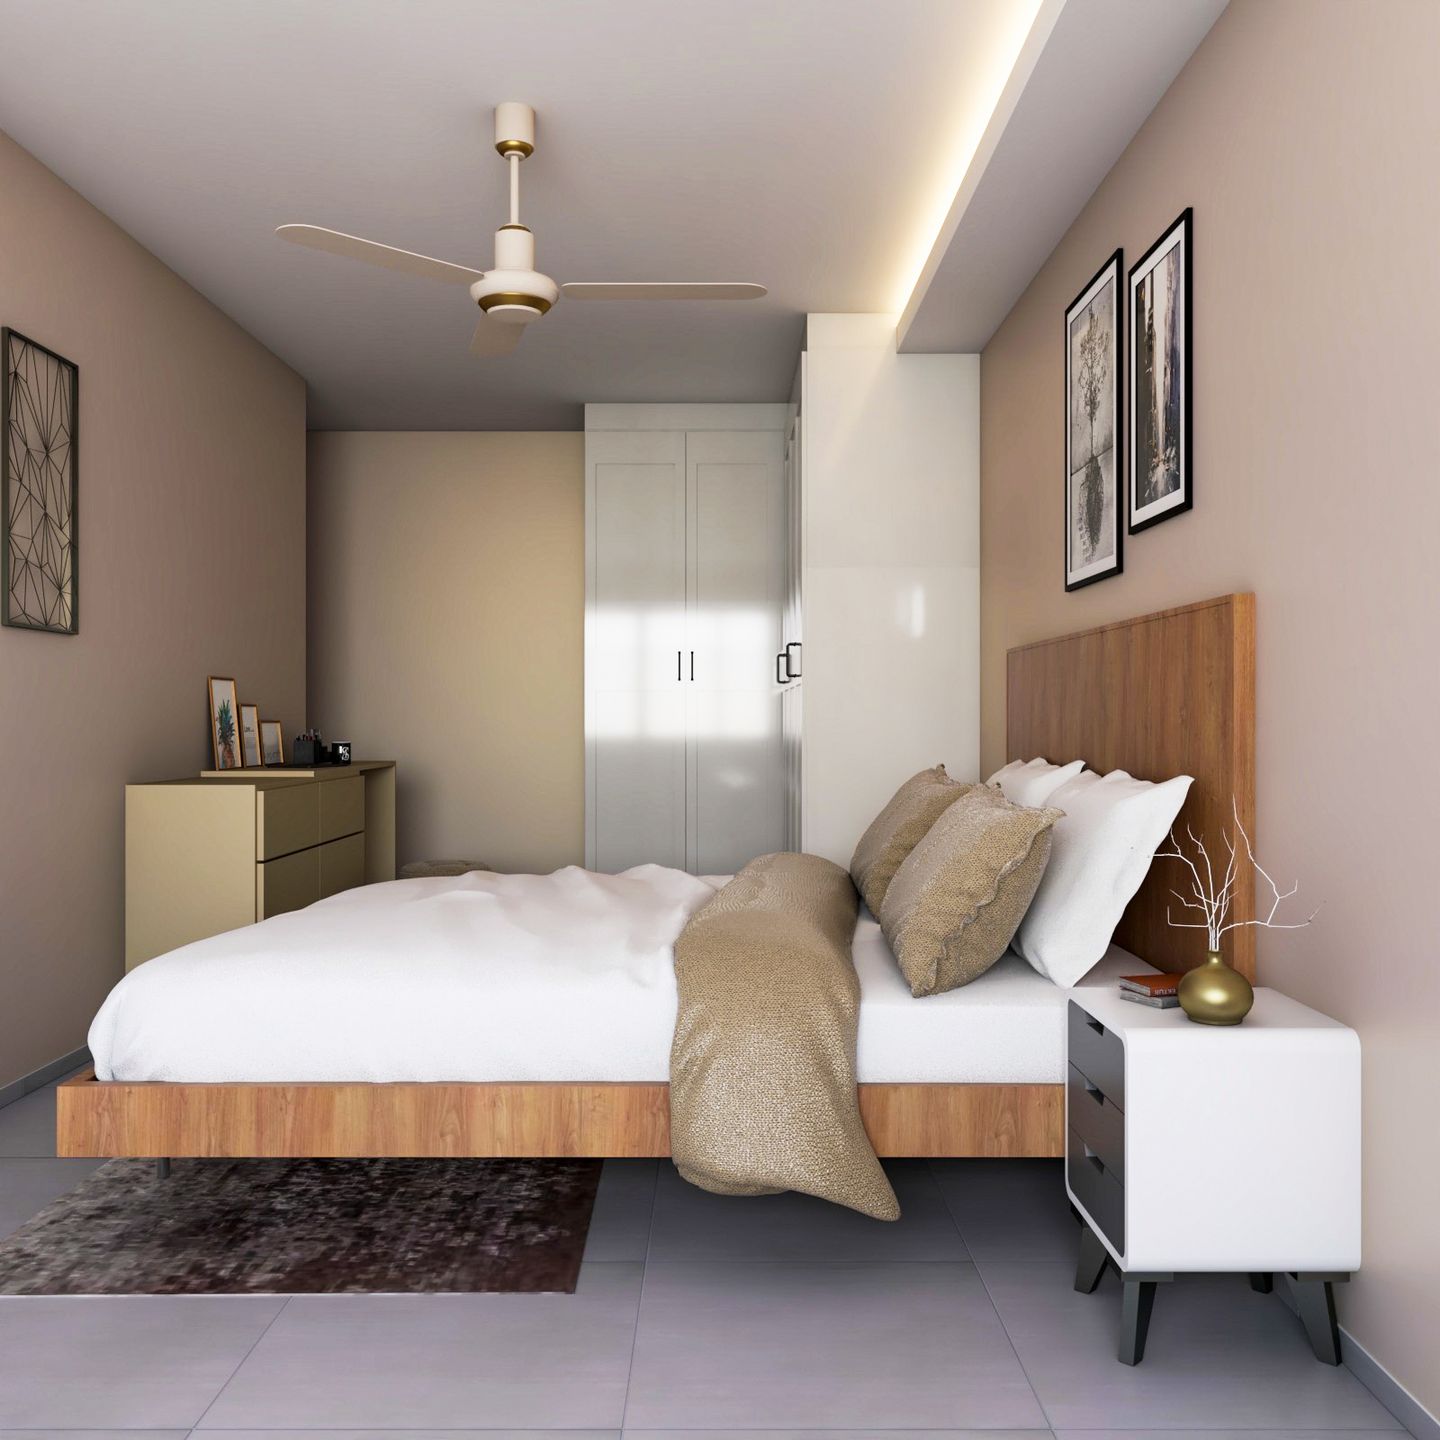 Master Bedroom With Sleek Wood Finish - Livspace